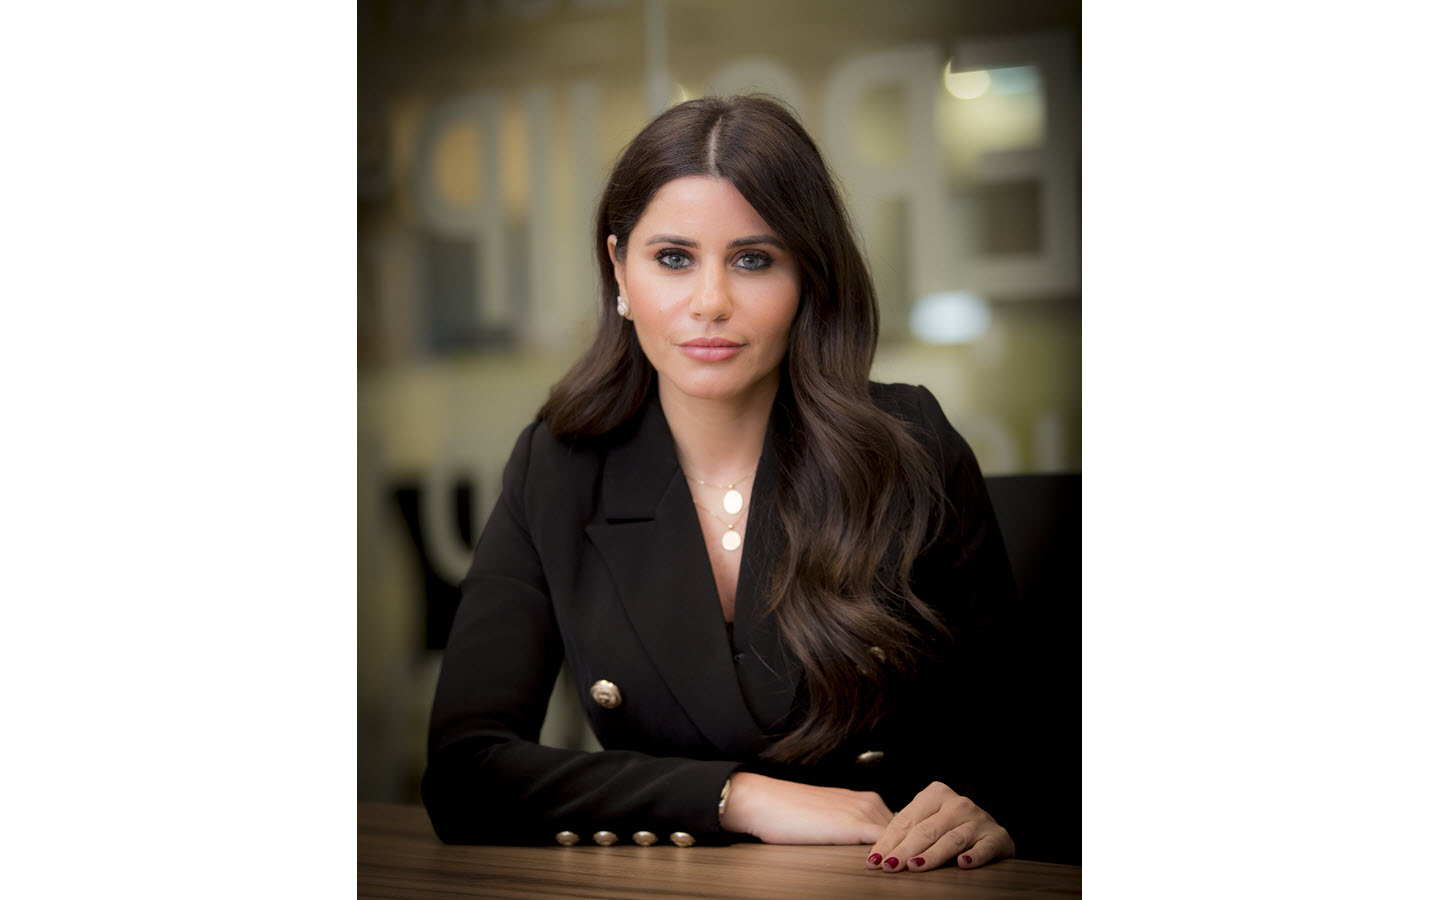 General Manager of Microsoft Qatar, Lana Khalaf